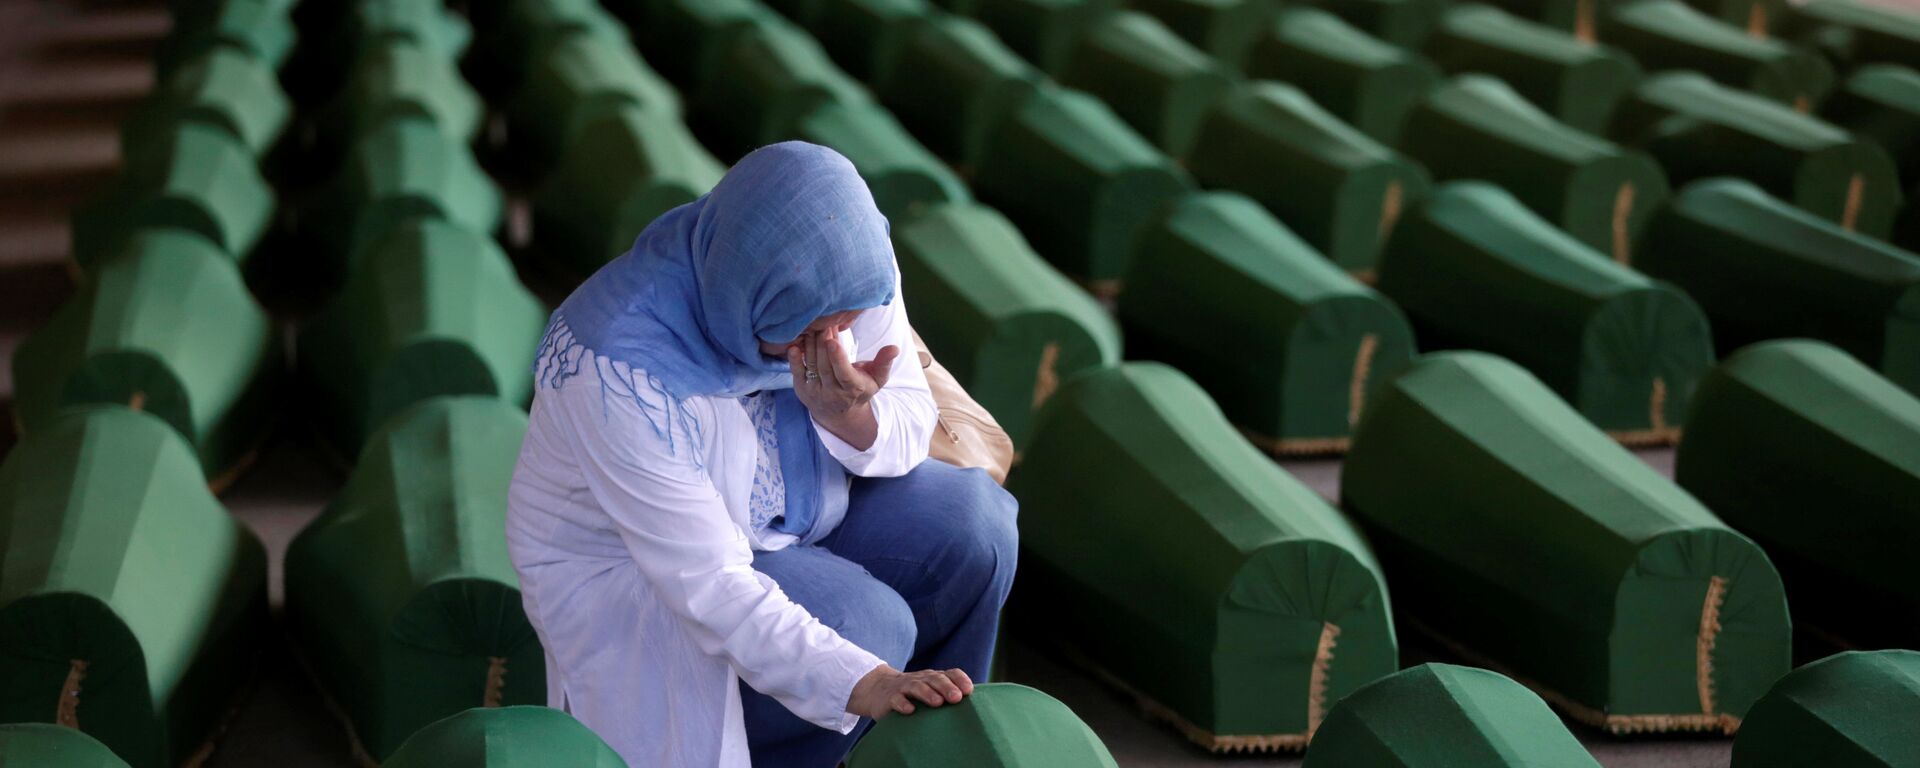 Obeležavanje 21. godine zločina u Srebrenici 11.07.2016.  - Sputnik Srbija, 1920, 22.07.2021